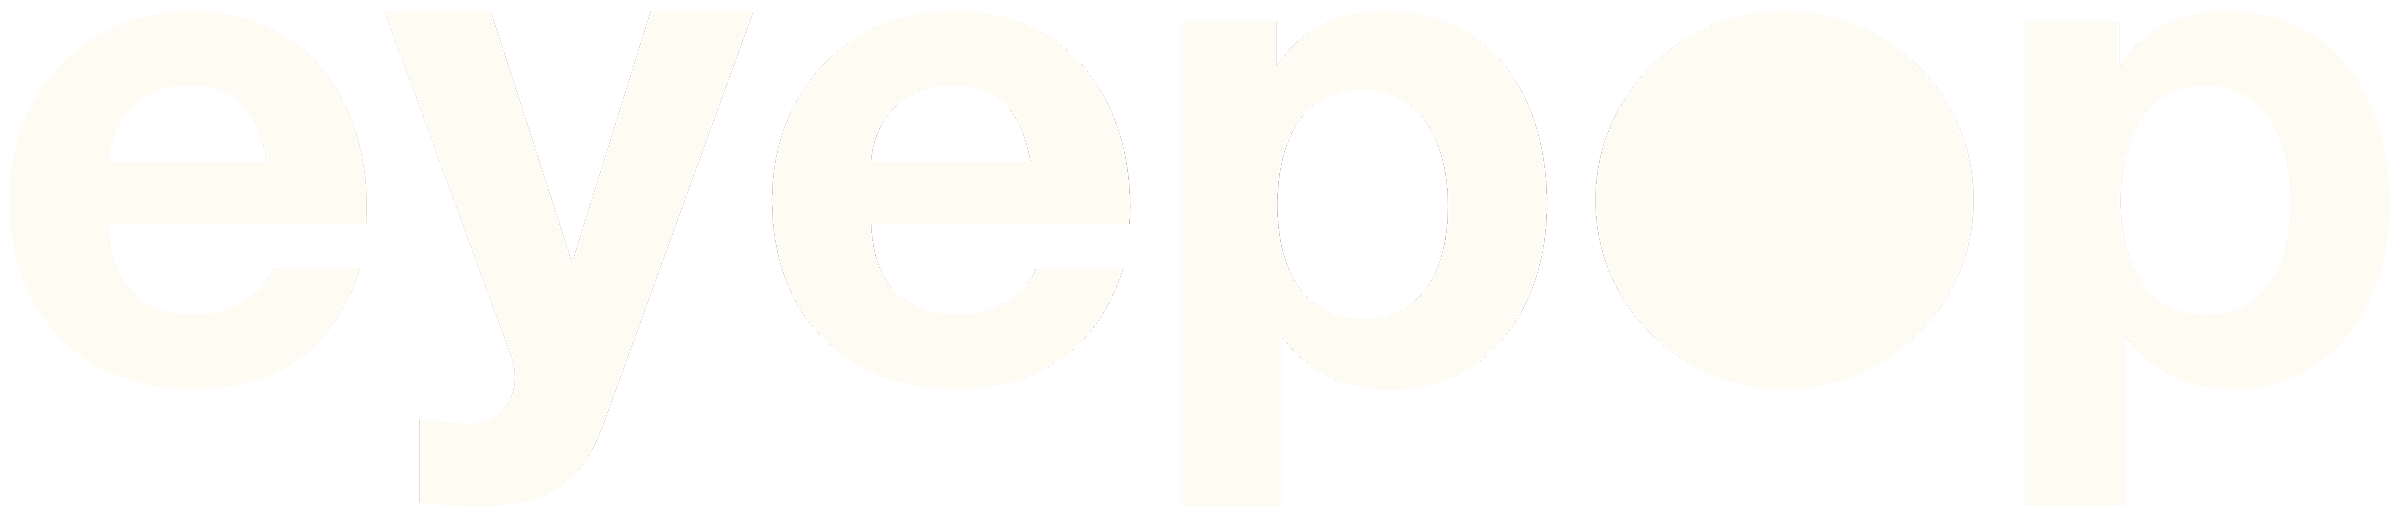 Eyepop Creative Marketing Logo PNG